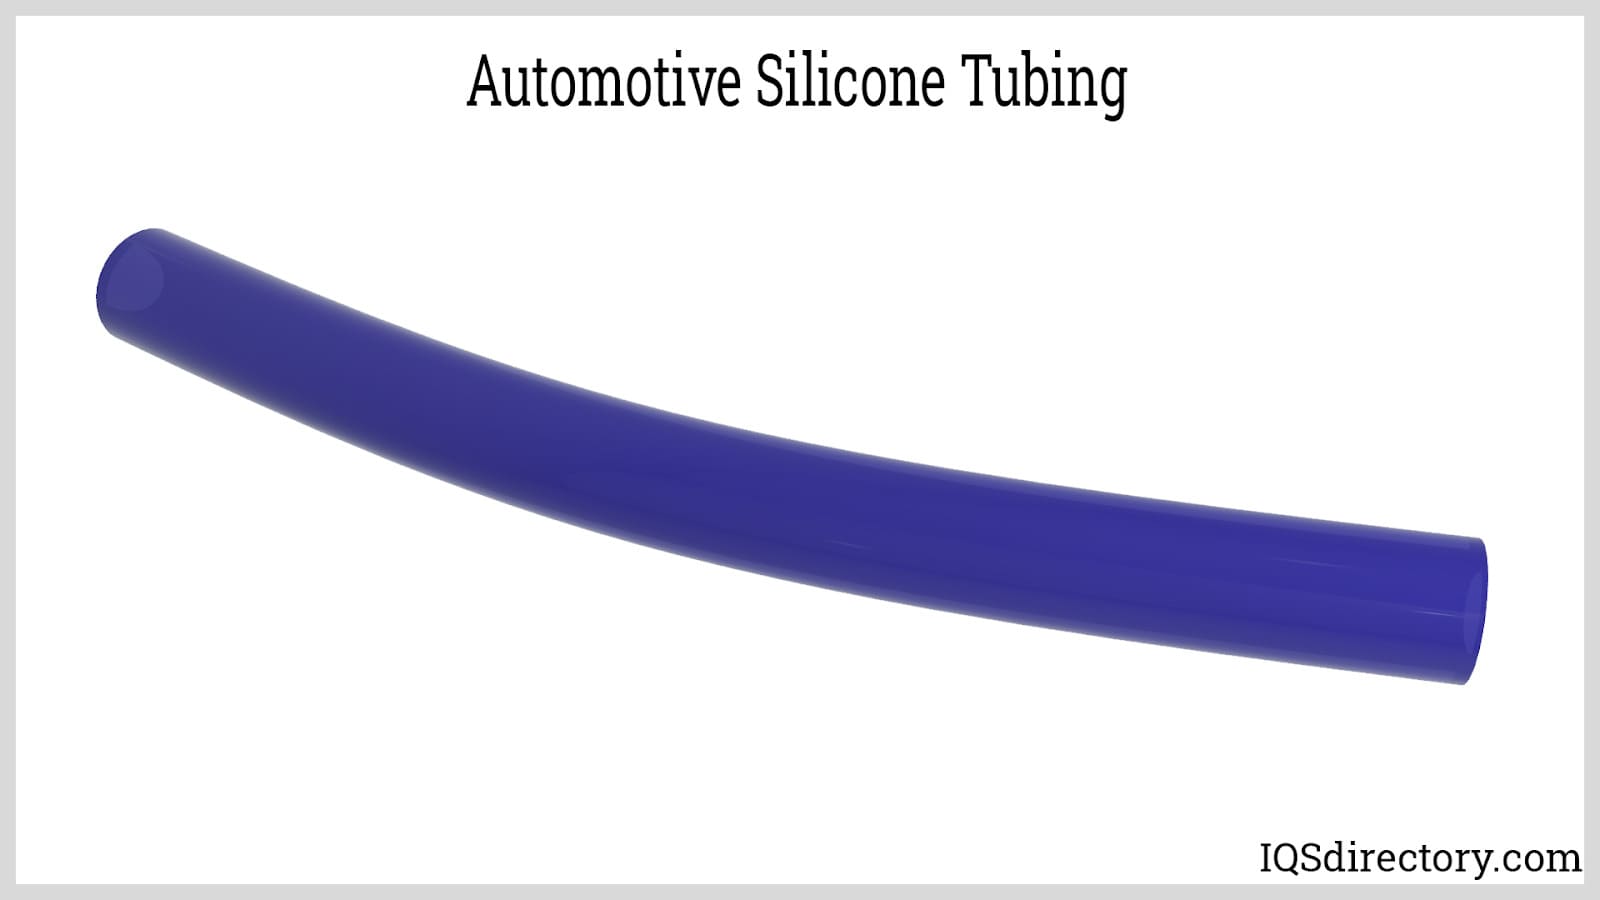 Automotive Silicone Tubing